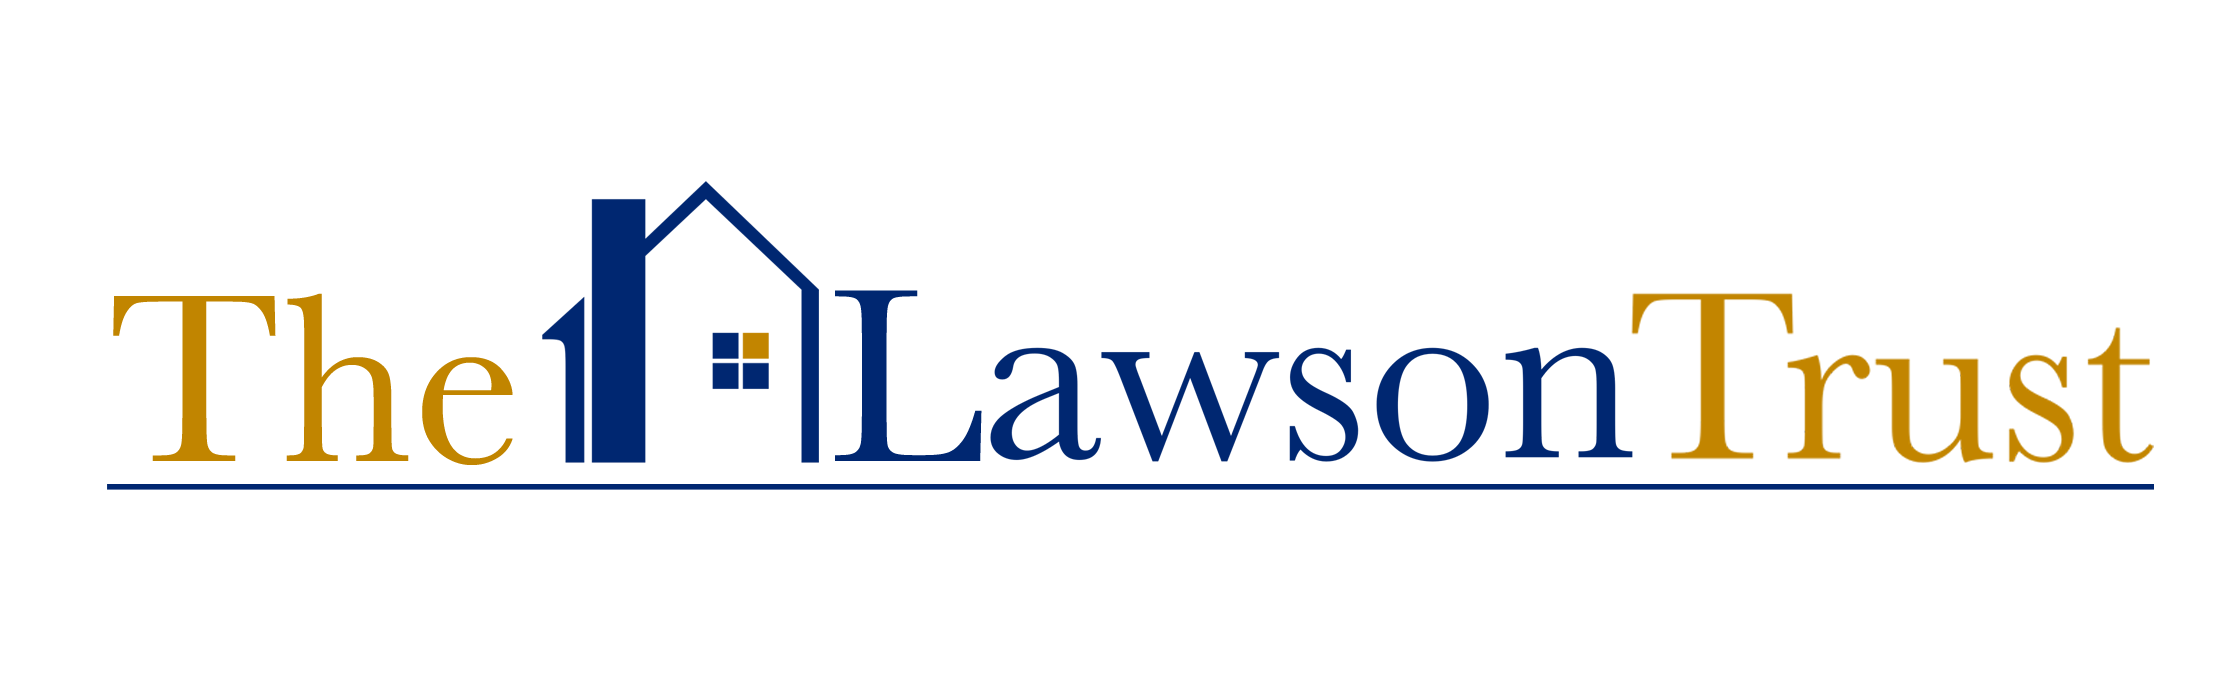 The Lawson Trust